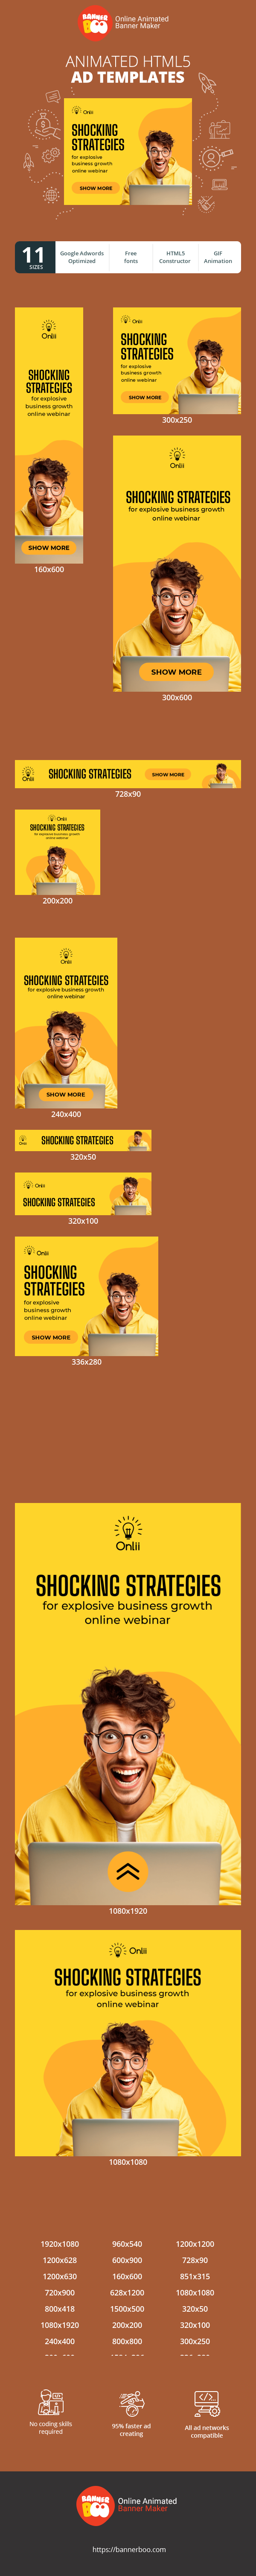 Шаблон рекламного банера — Shocking Strategies — For Explosive Business Growth Online Webinar